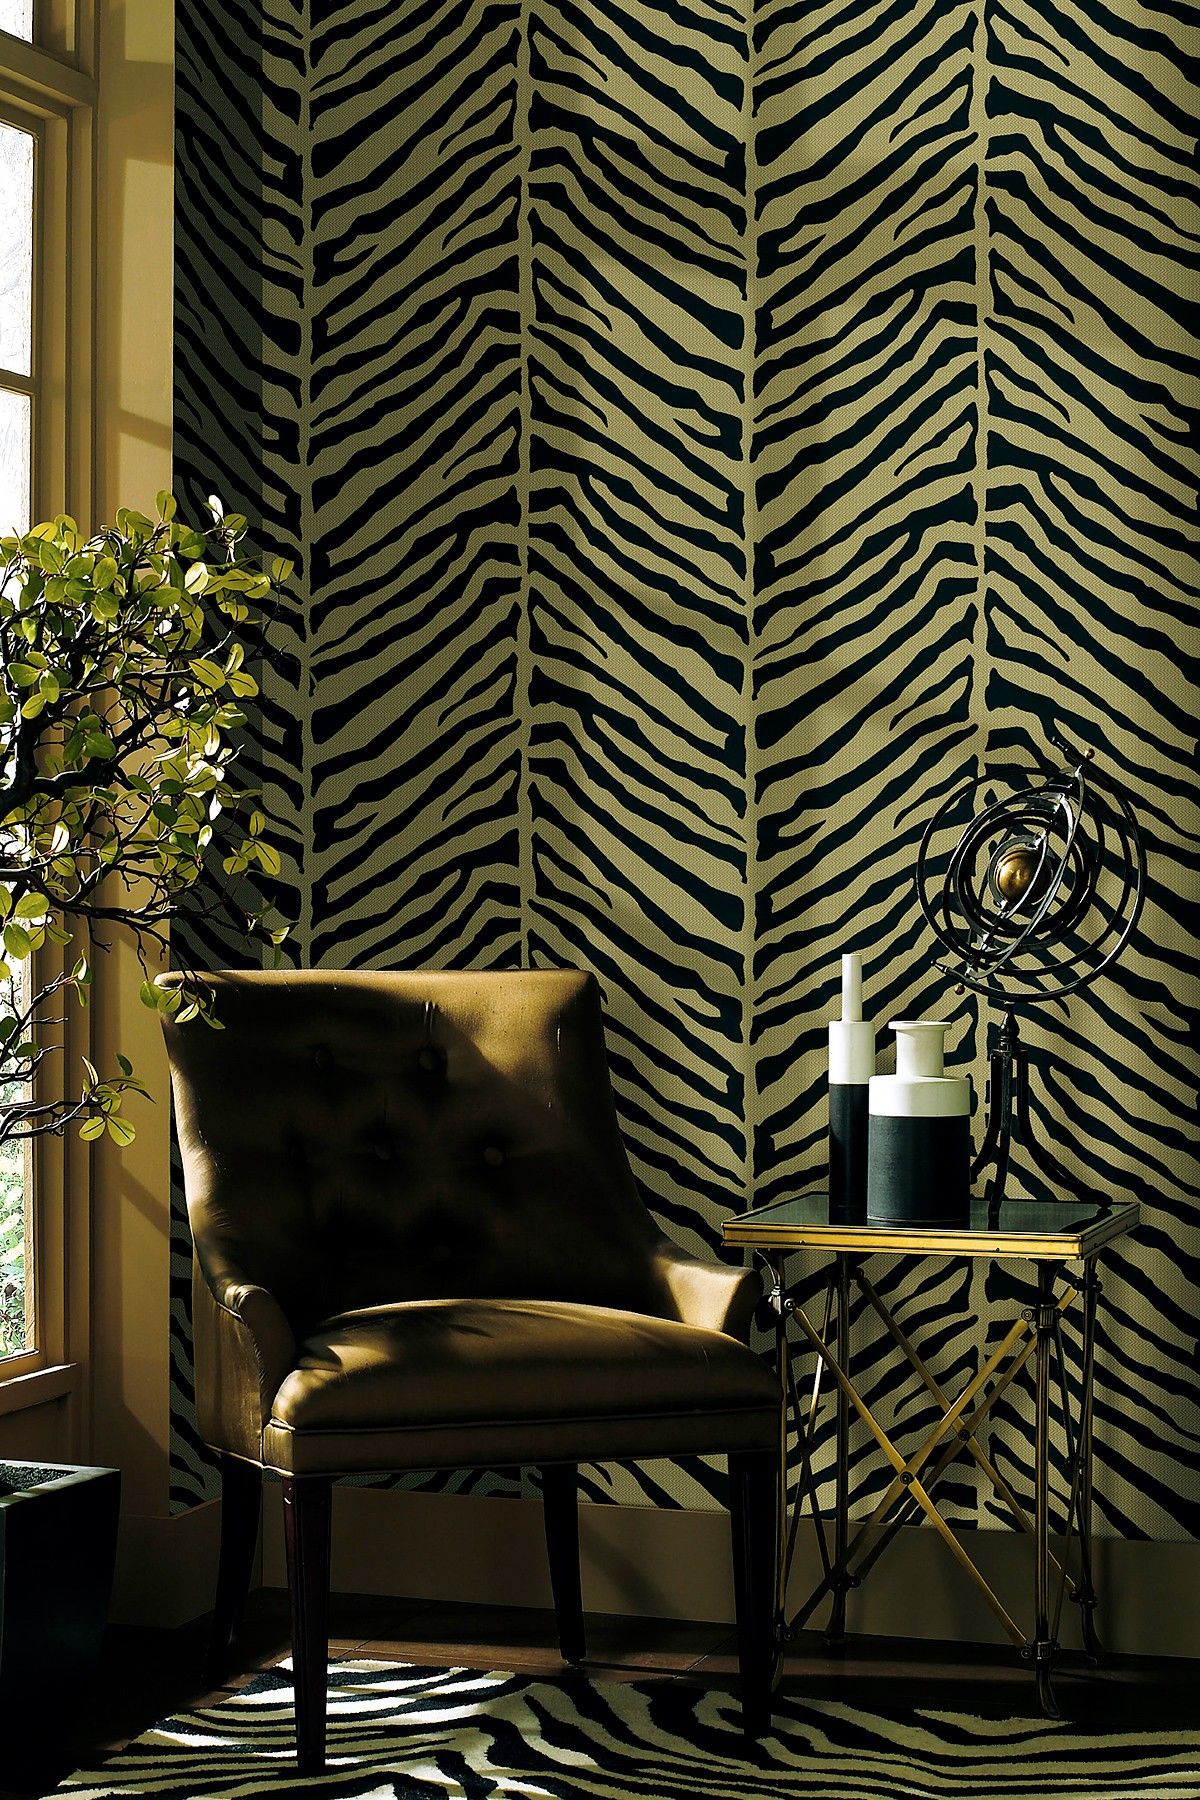 black and beige wallpaper,wallpaper,wall,interior design,furniture,room